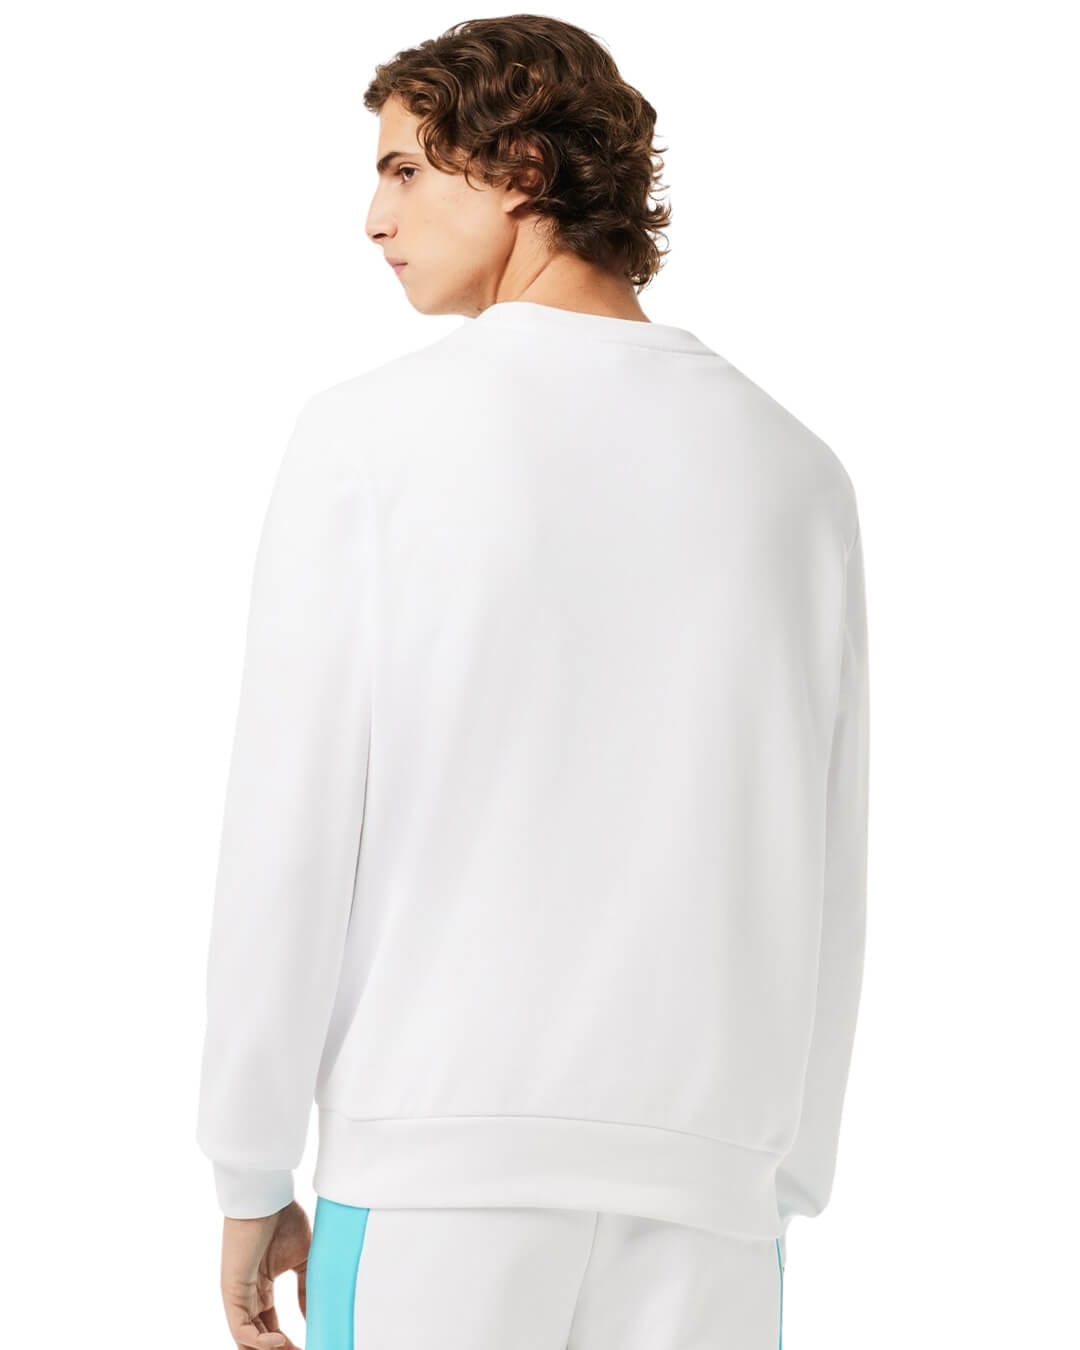 Lacoste Jumpers Lacoste White Classic Fit 3D Print Colourblock Jogger Sweatshirt